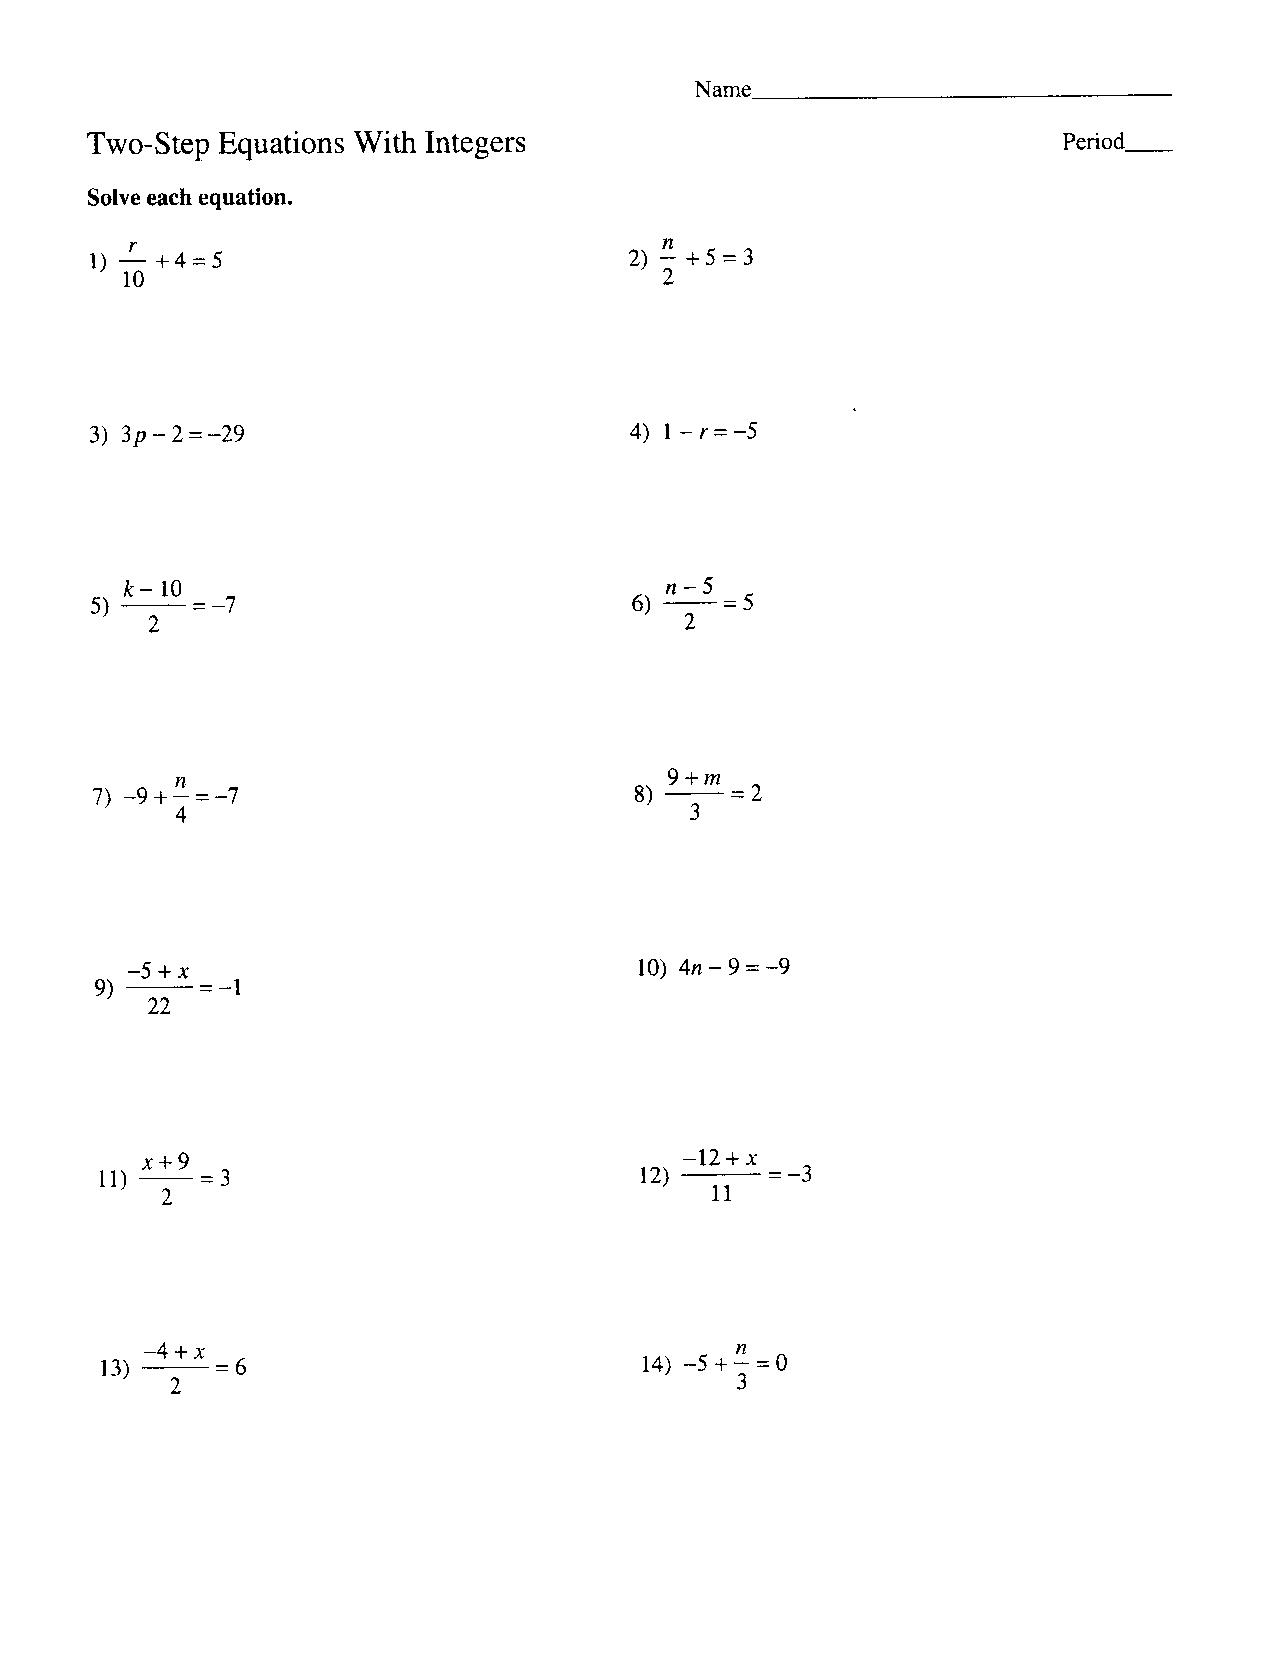 Free Printable 2 Step Equations Worksheets